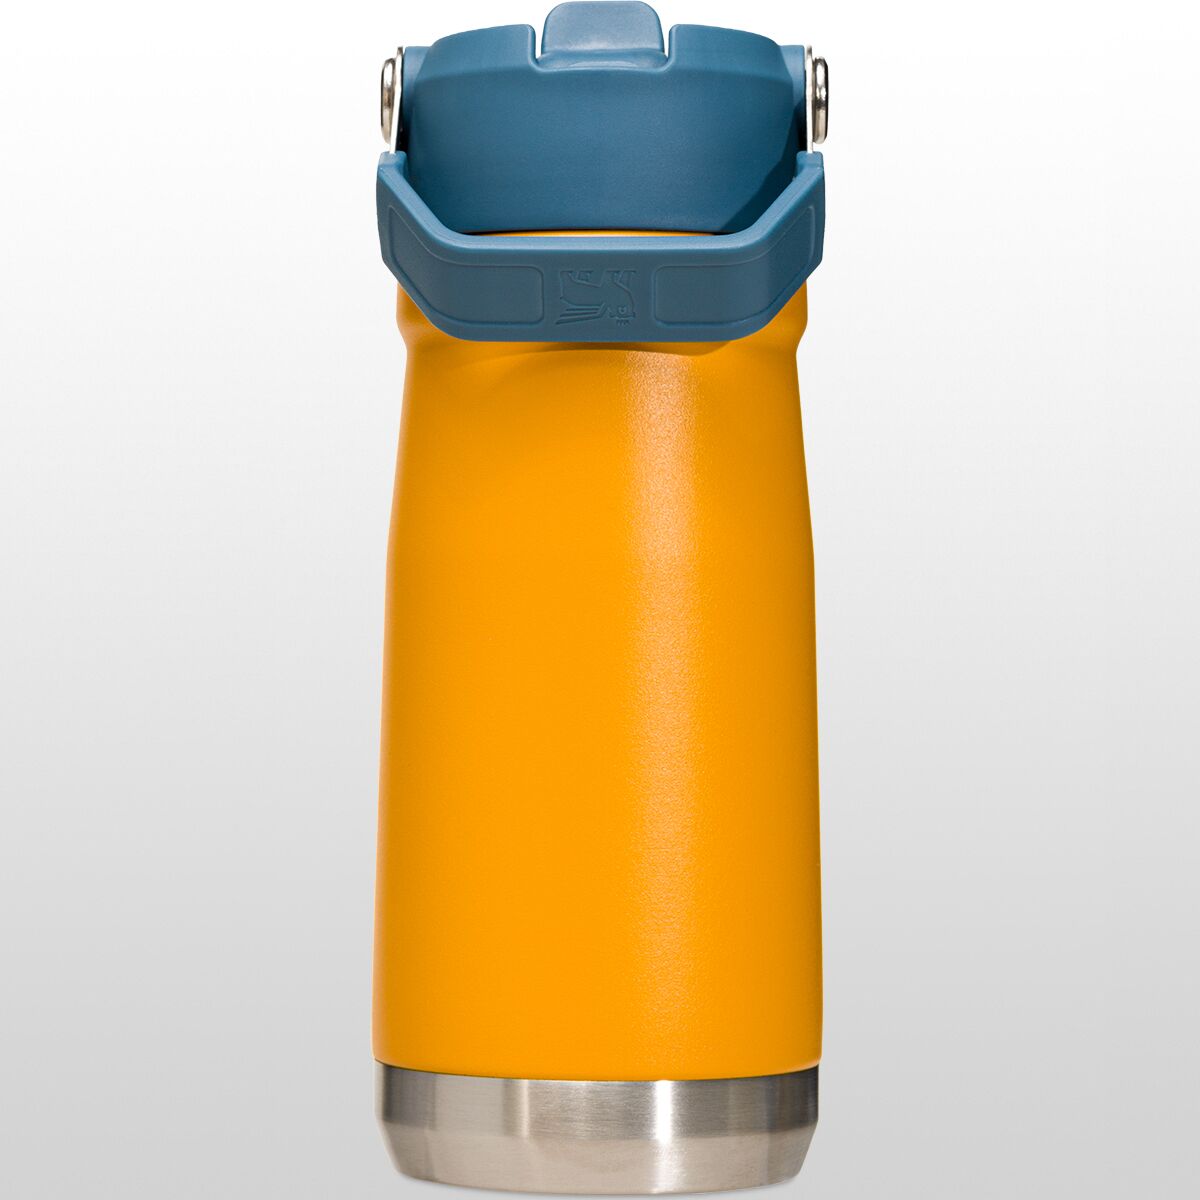 Stanley IceFlow Flip Straw Water Bottle, 17 oz. Charcoal